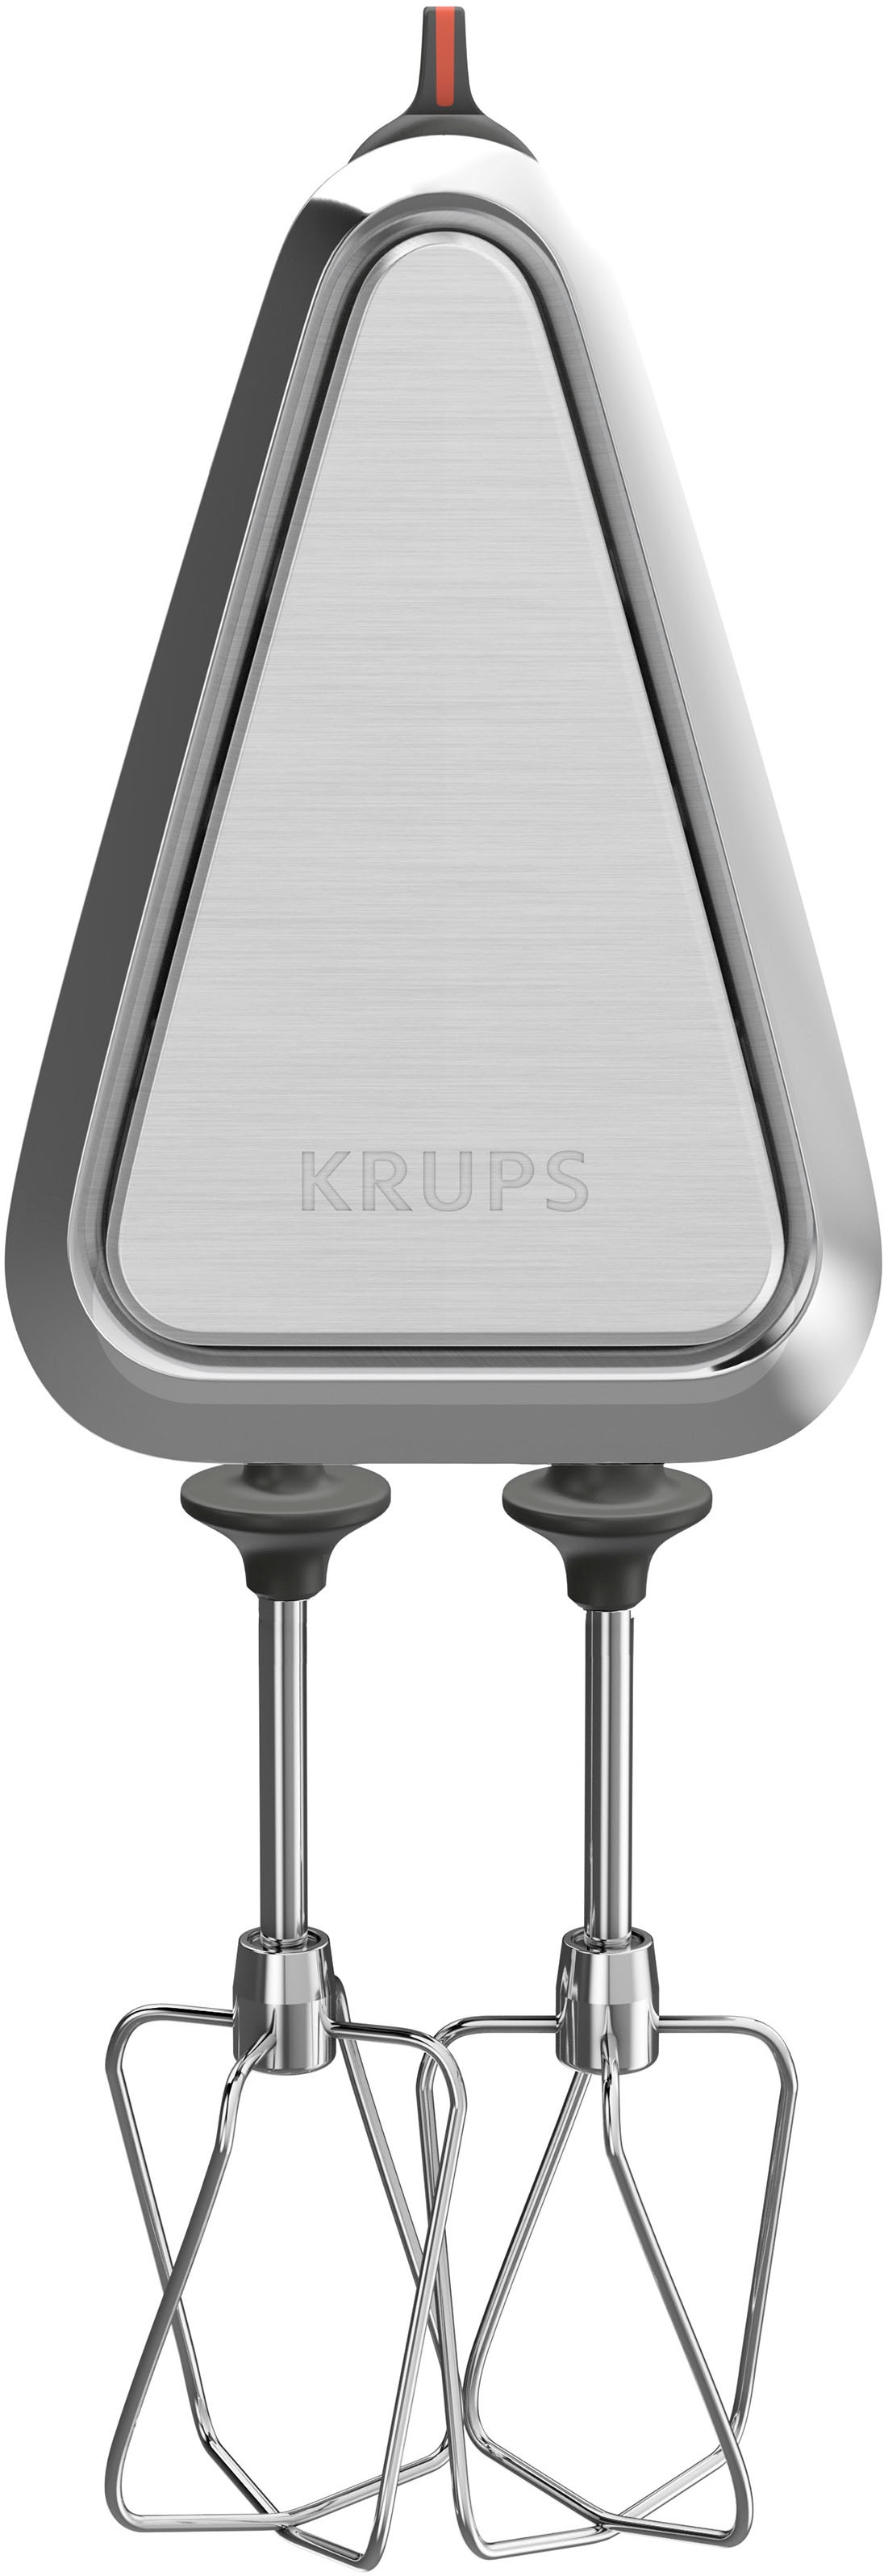 Krups Handmixer »GN9121 3, Mix 9000«, 750 W, inkl. Schneebesen, Knethaken, Pürierstab-Aufsatz, Messbecher